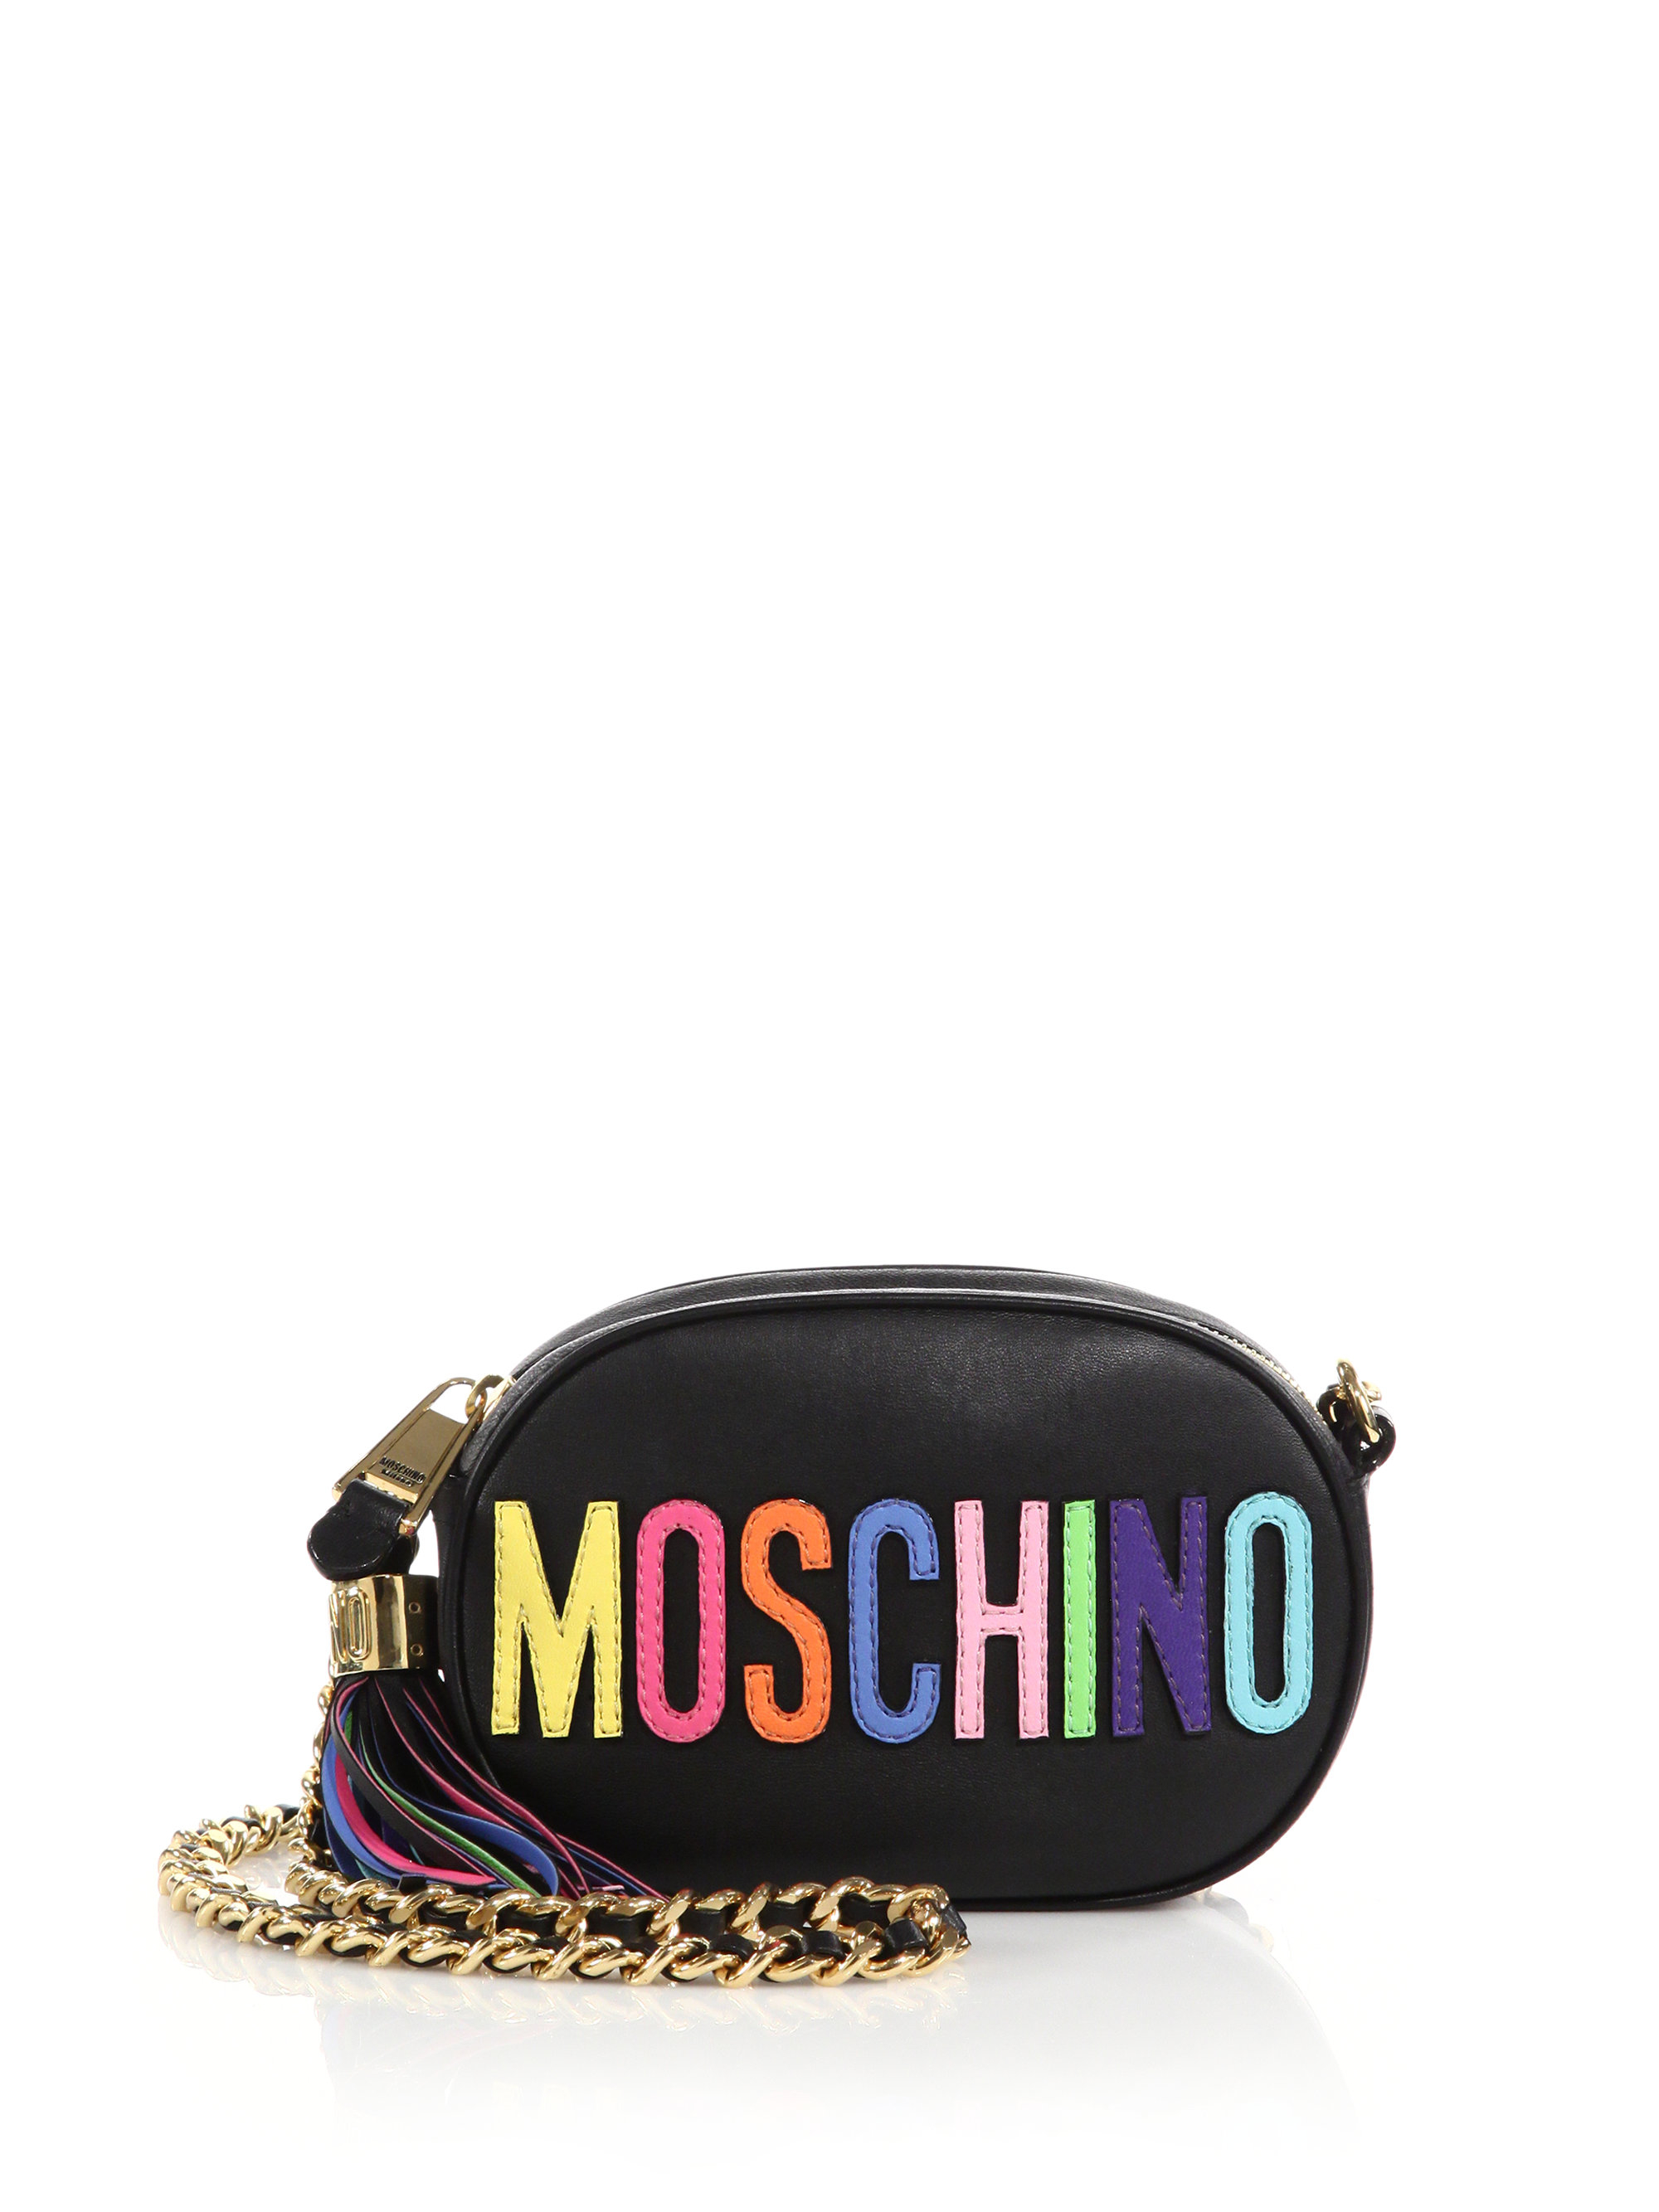 Moschino Logo Chain-Strap Crossbody Bag in Black | Lyst